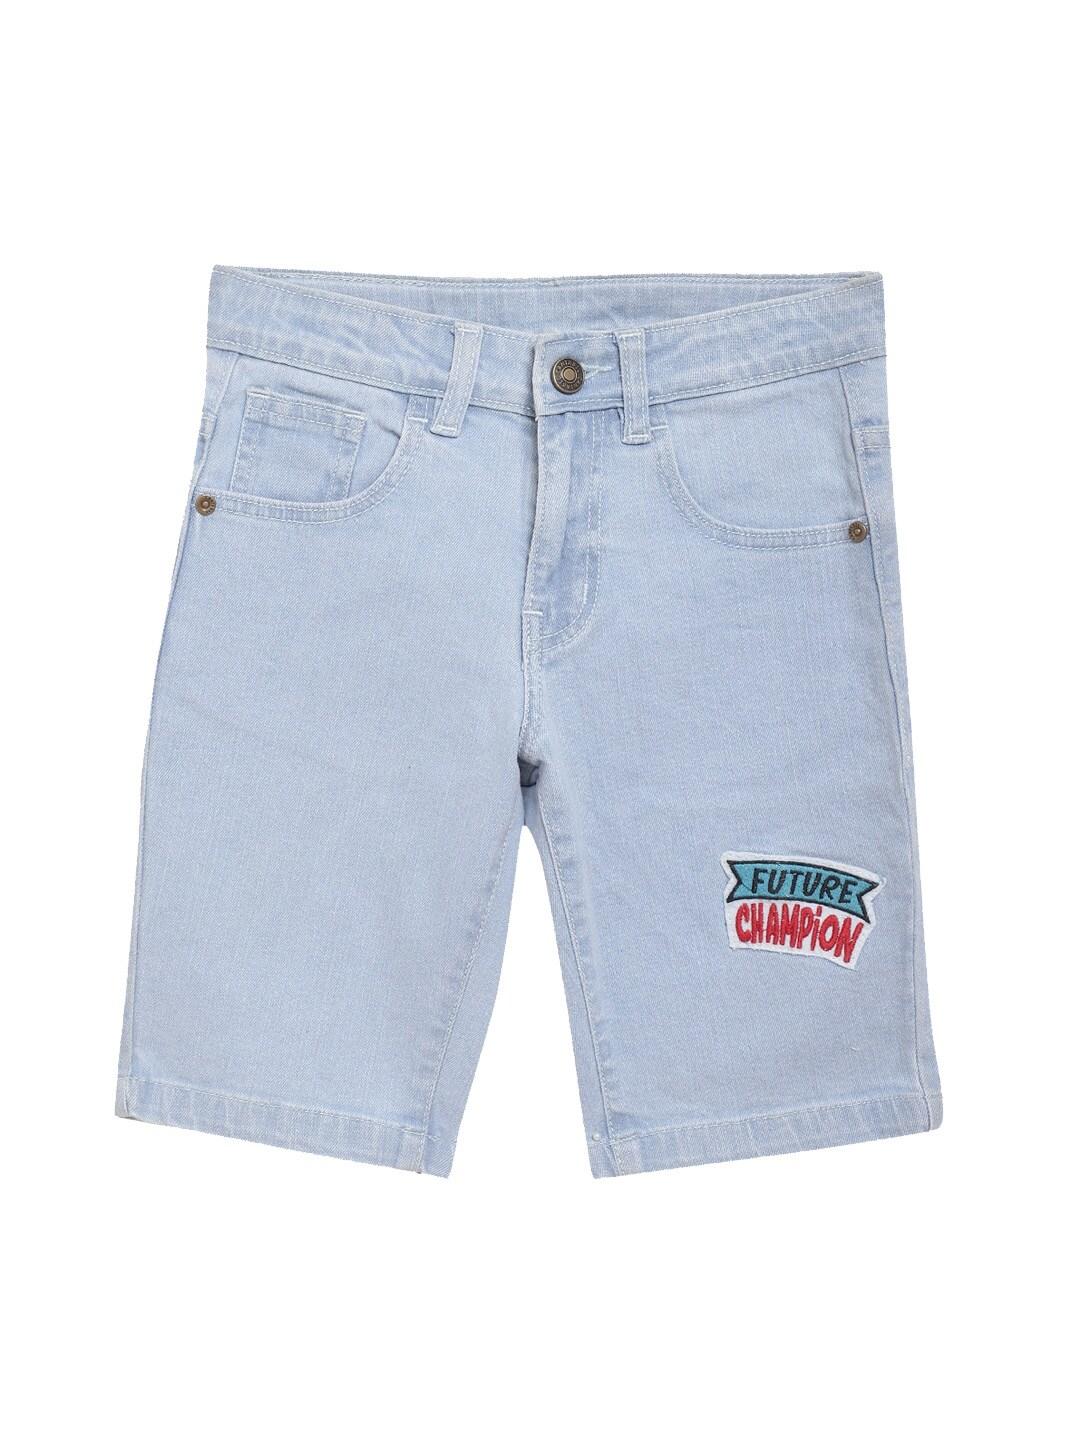 cantabil boys cotton high-rise regular fit denim shorts